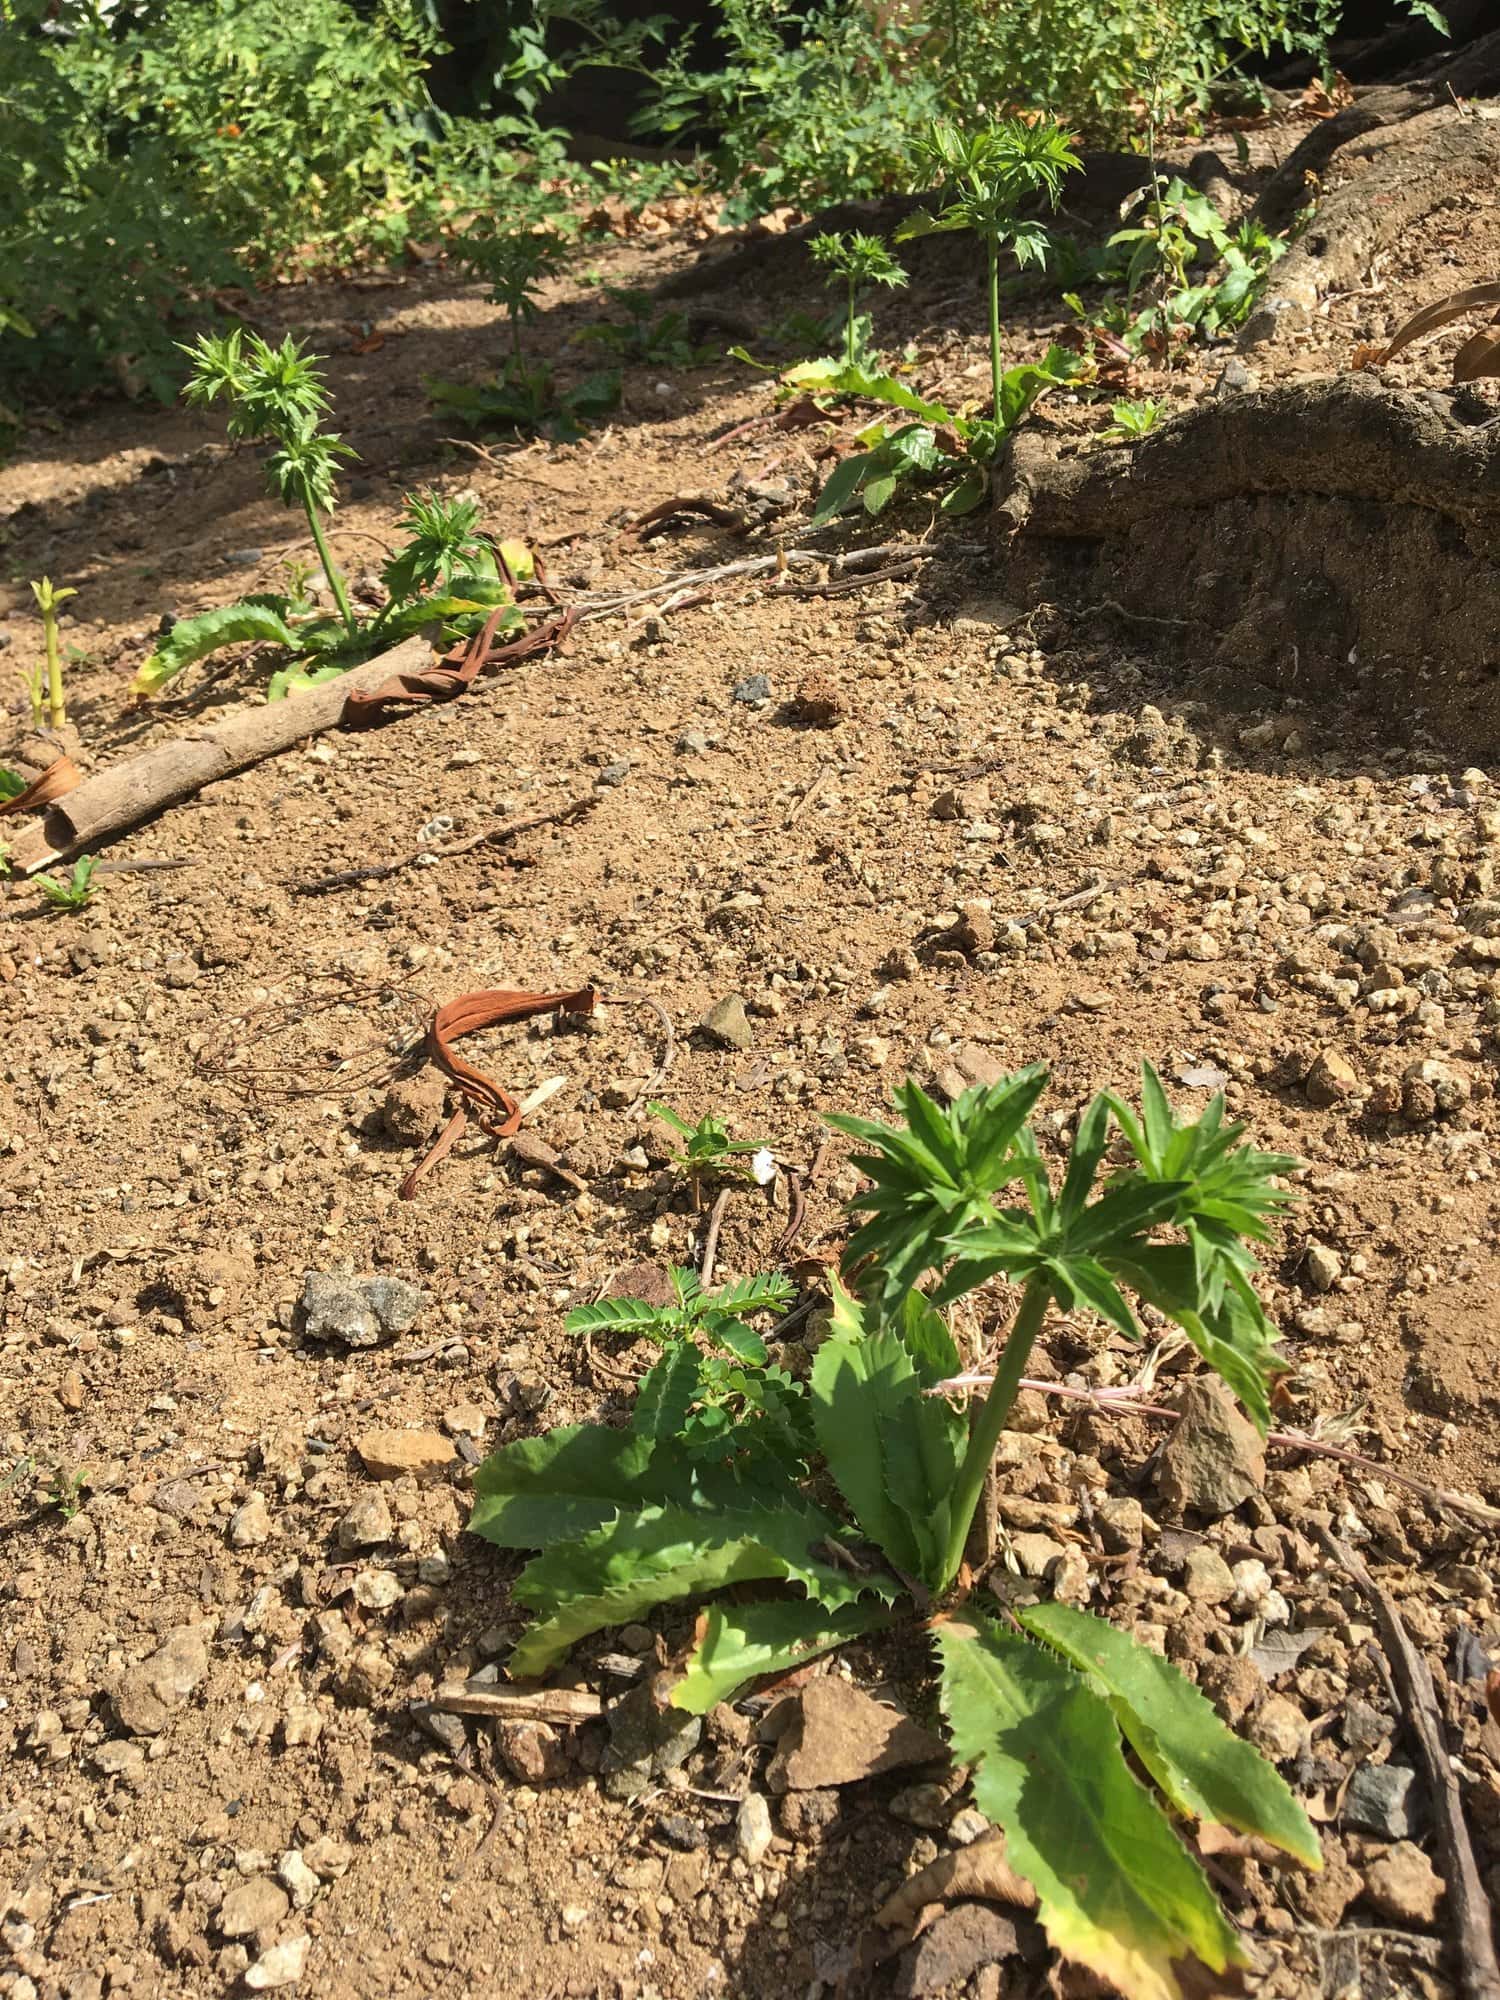 Wild cilantro plants in dirt